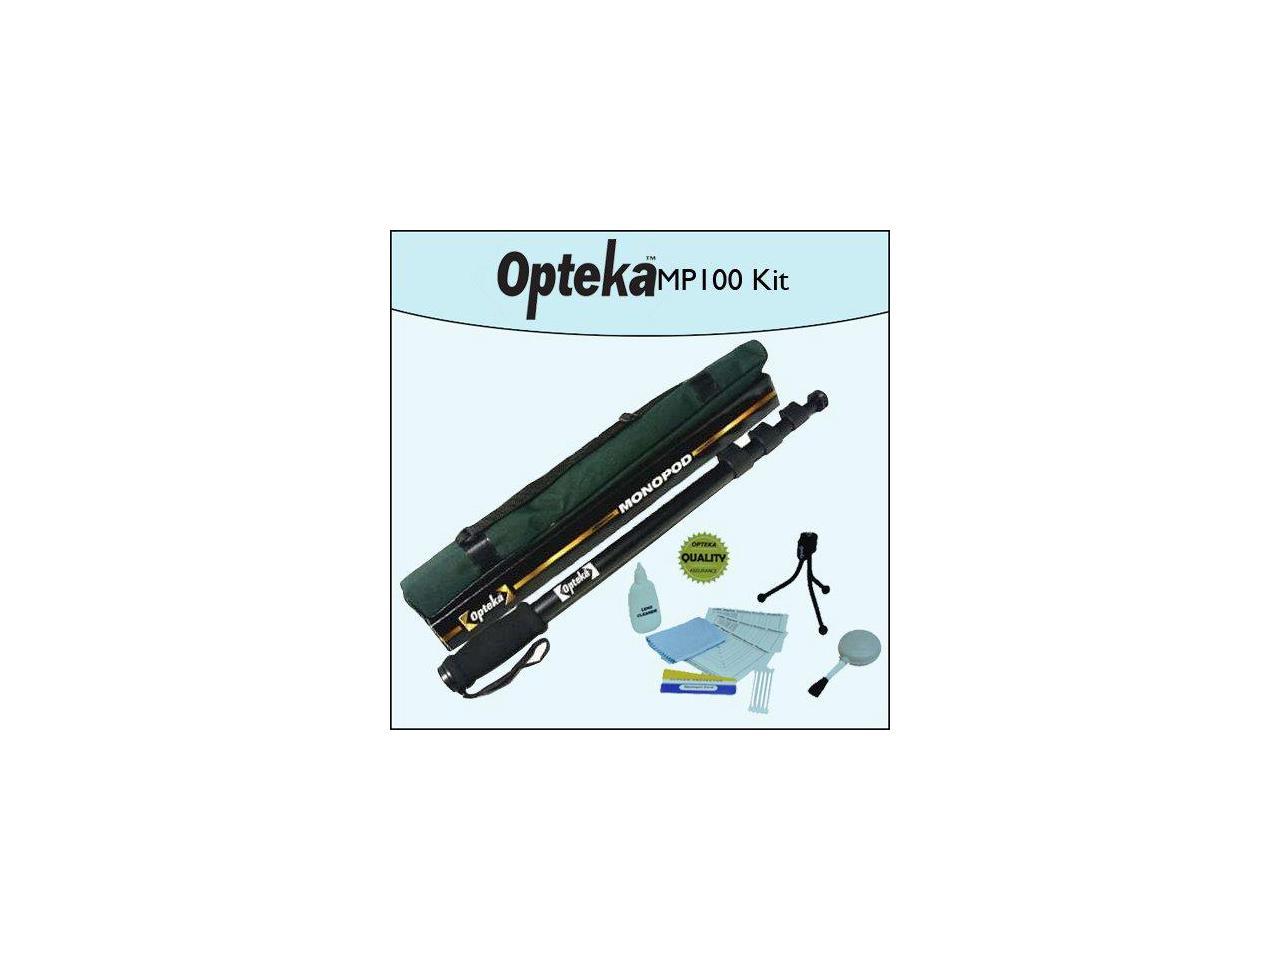 Opteka MP100 67 Pro Photo/Video Monopod with Opteka Mini Tripod and More!